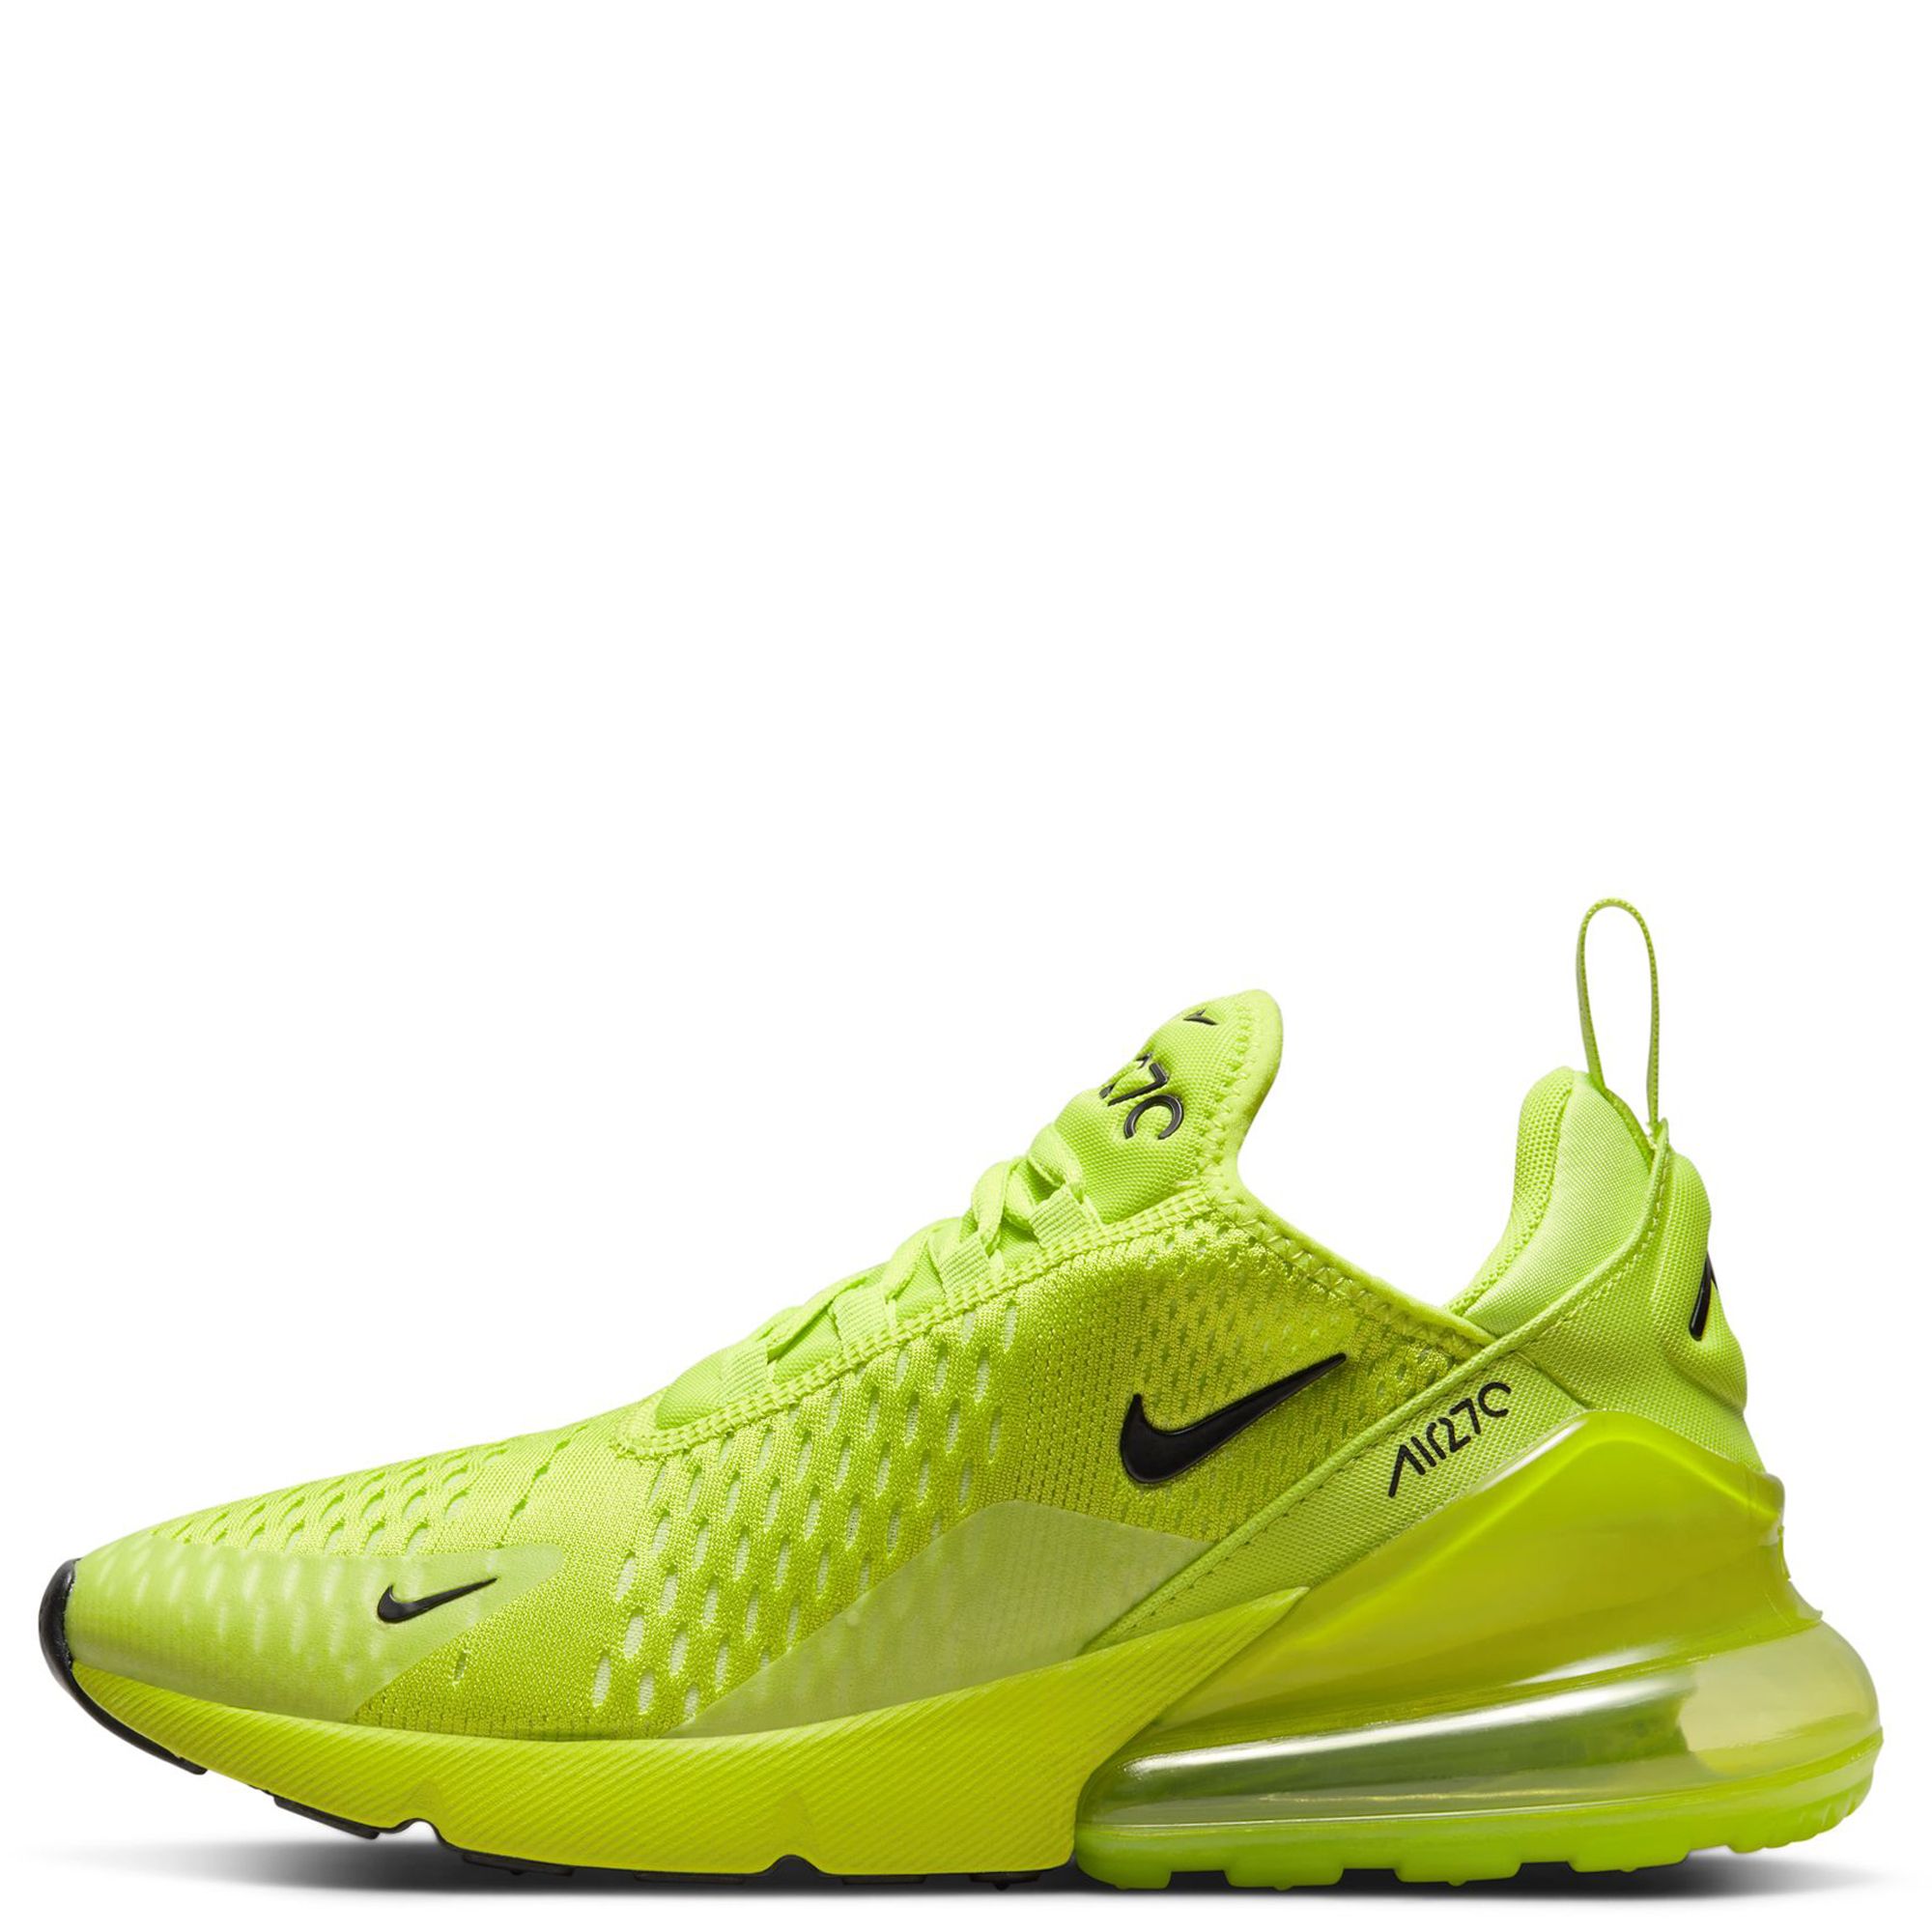 Nike Advance crossbody bag in neon green